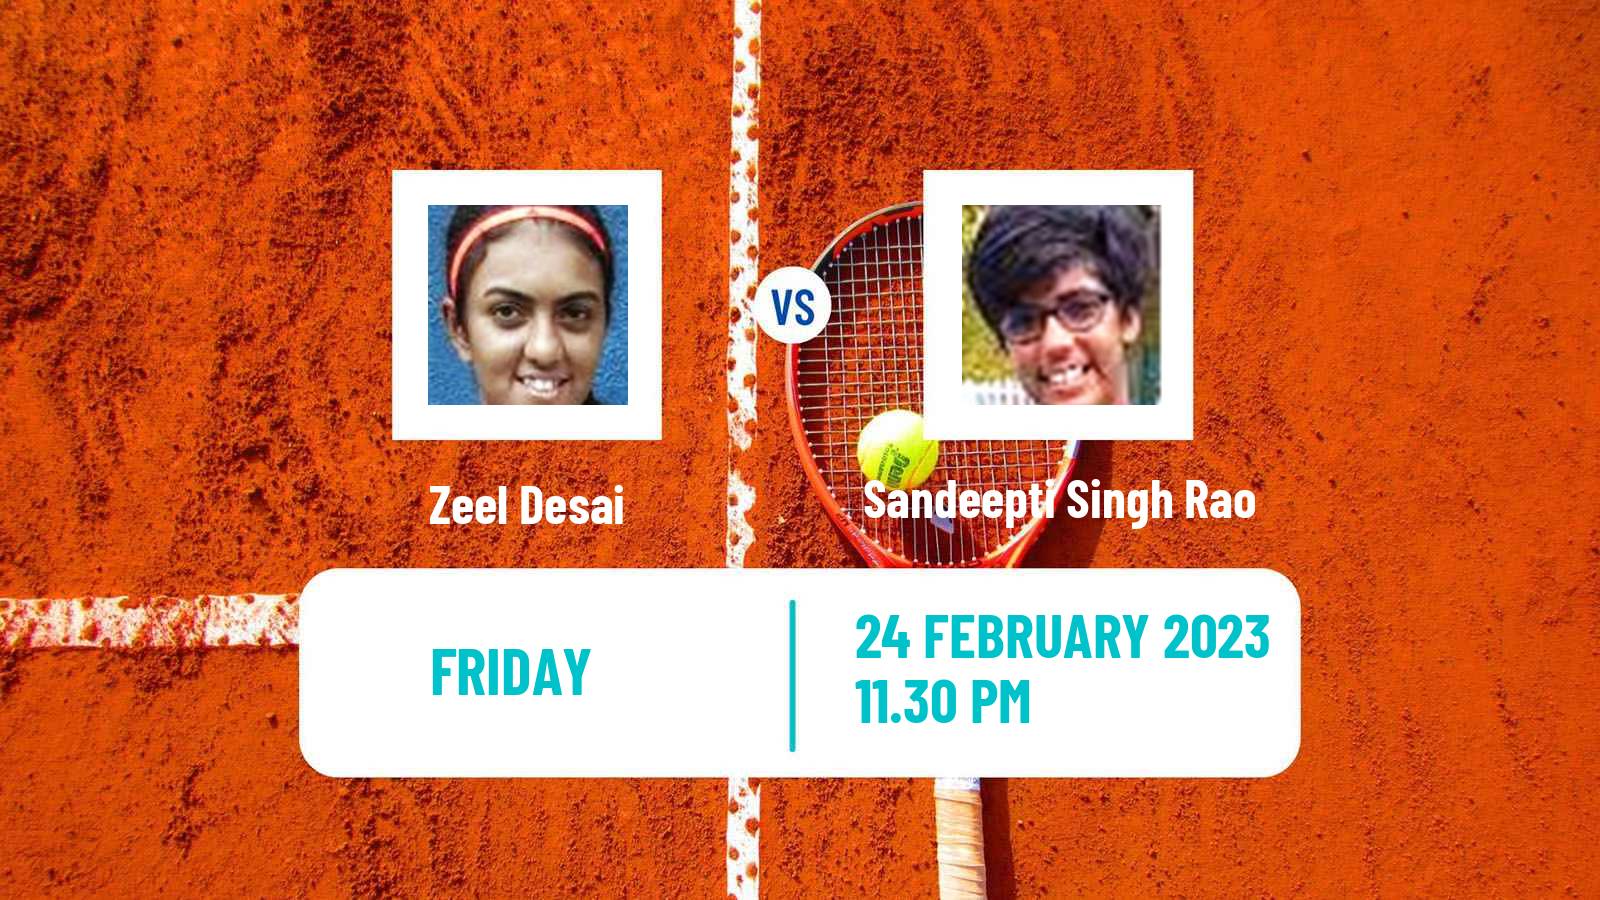 Tennis ITF Tournaments Zeel Desai - Sandeepti Singh Rao